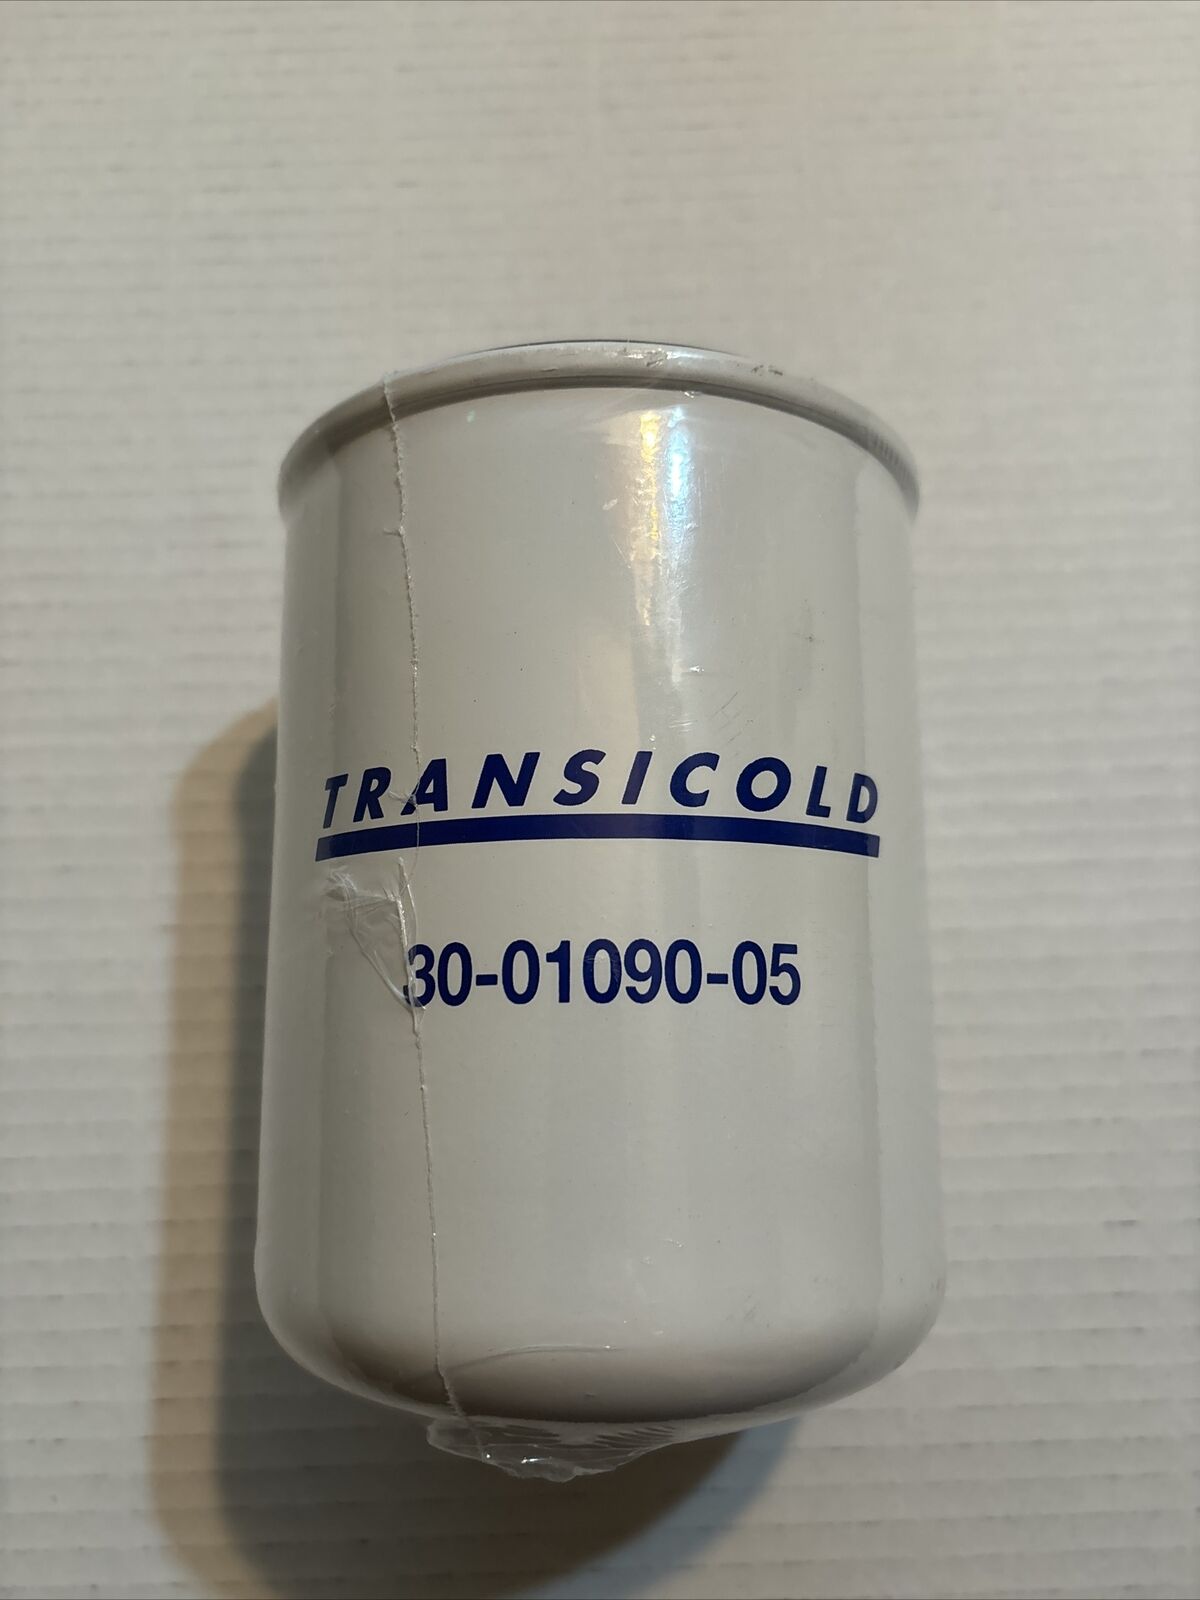 Fuel filter 30-01090-05 300109005 for carrier transicold